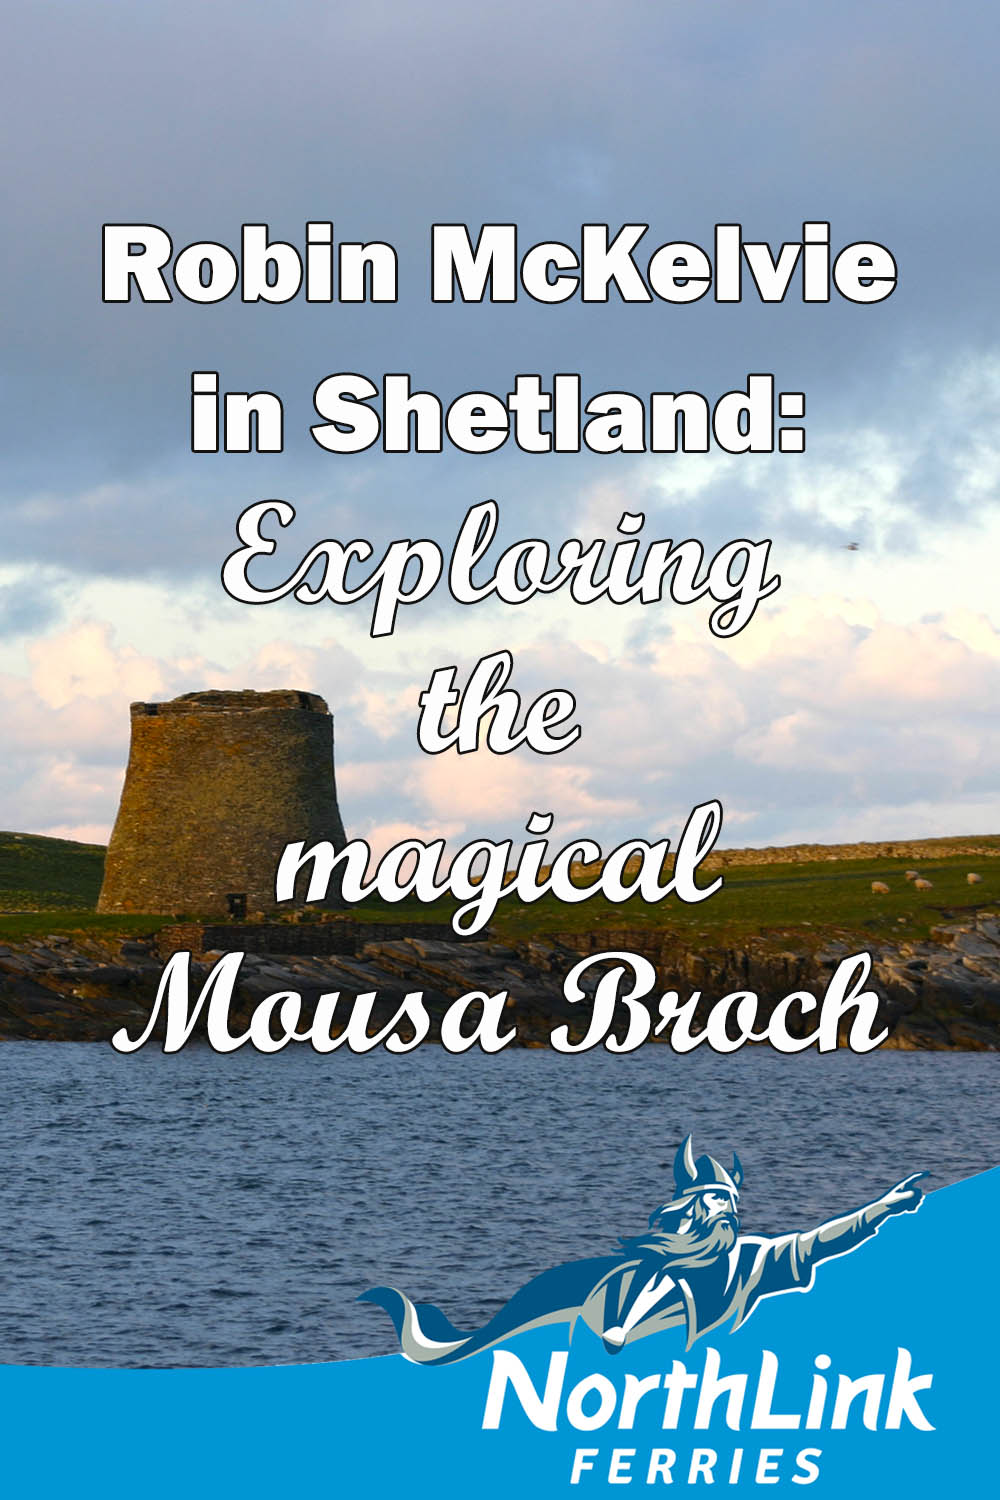 Robin McKelvie in Shetland: Exploring the magical Mousa Broch